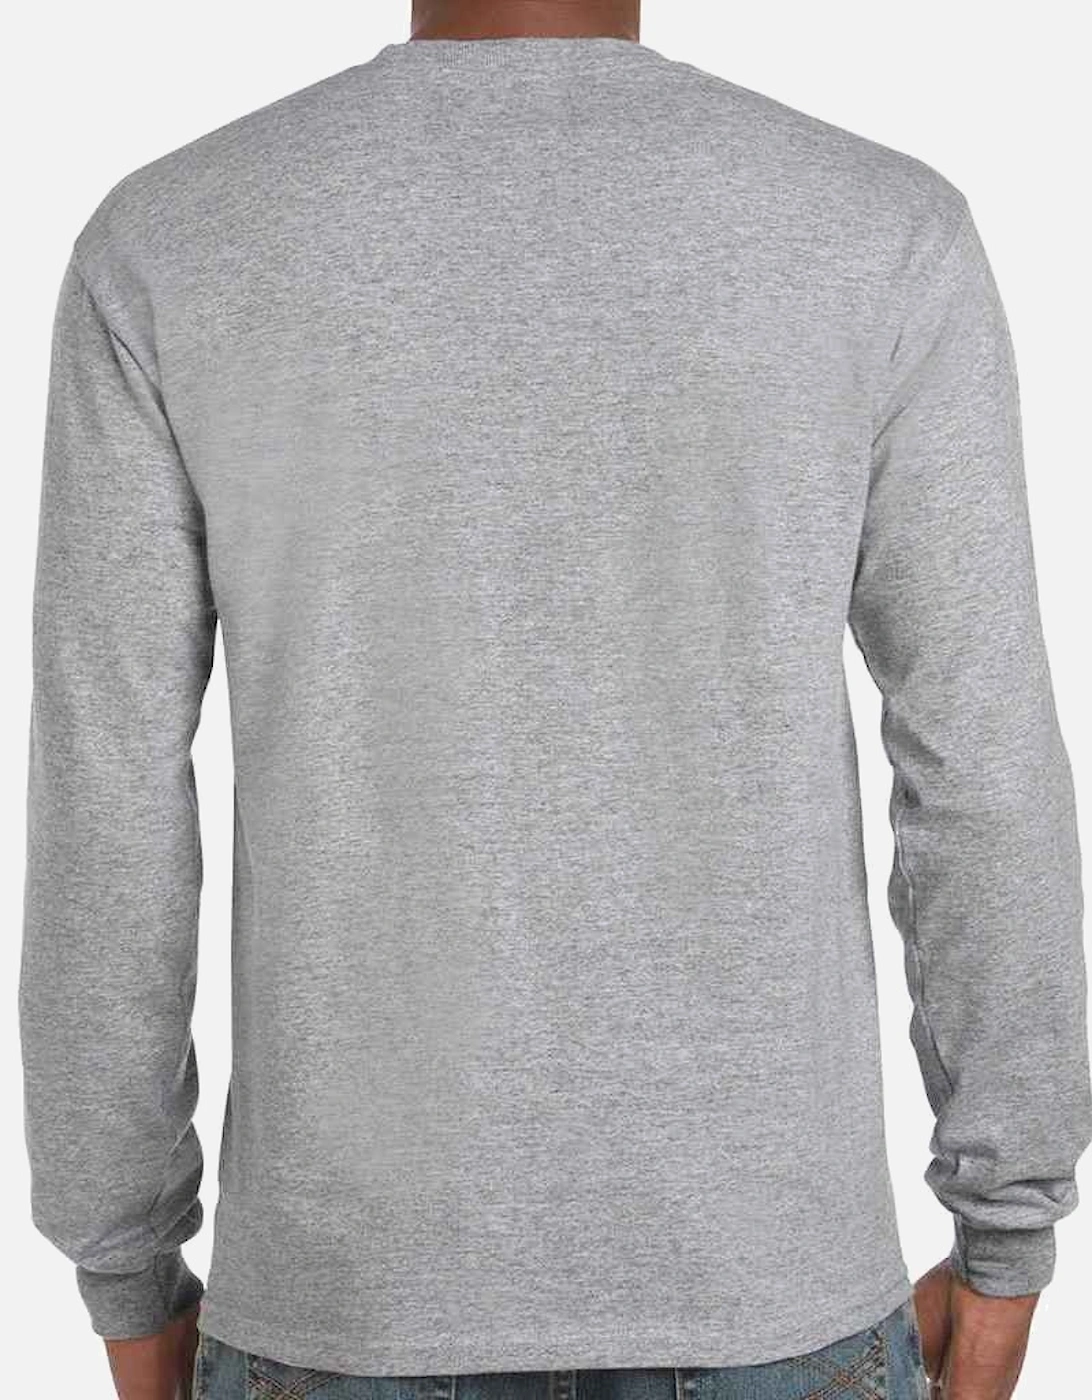 Unisex Adult Ultra Cotton Plain Long-Sleeved T-Shirt